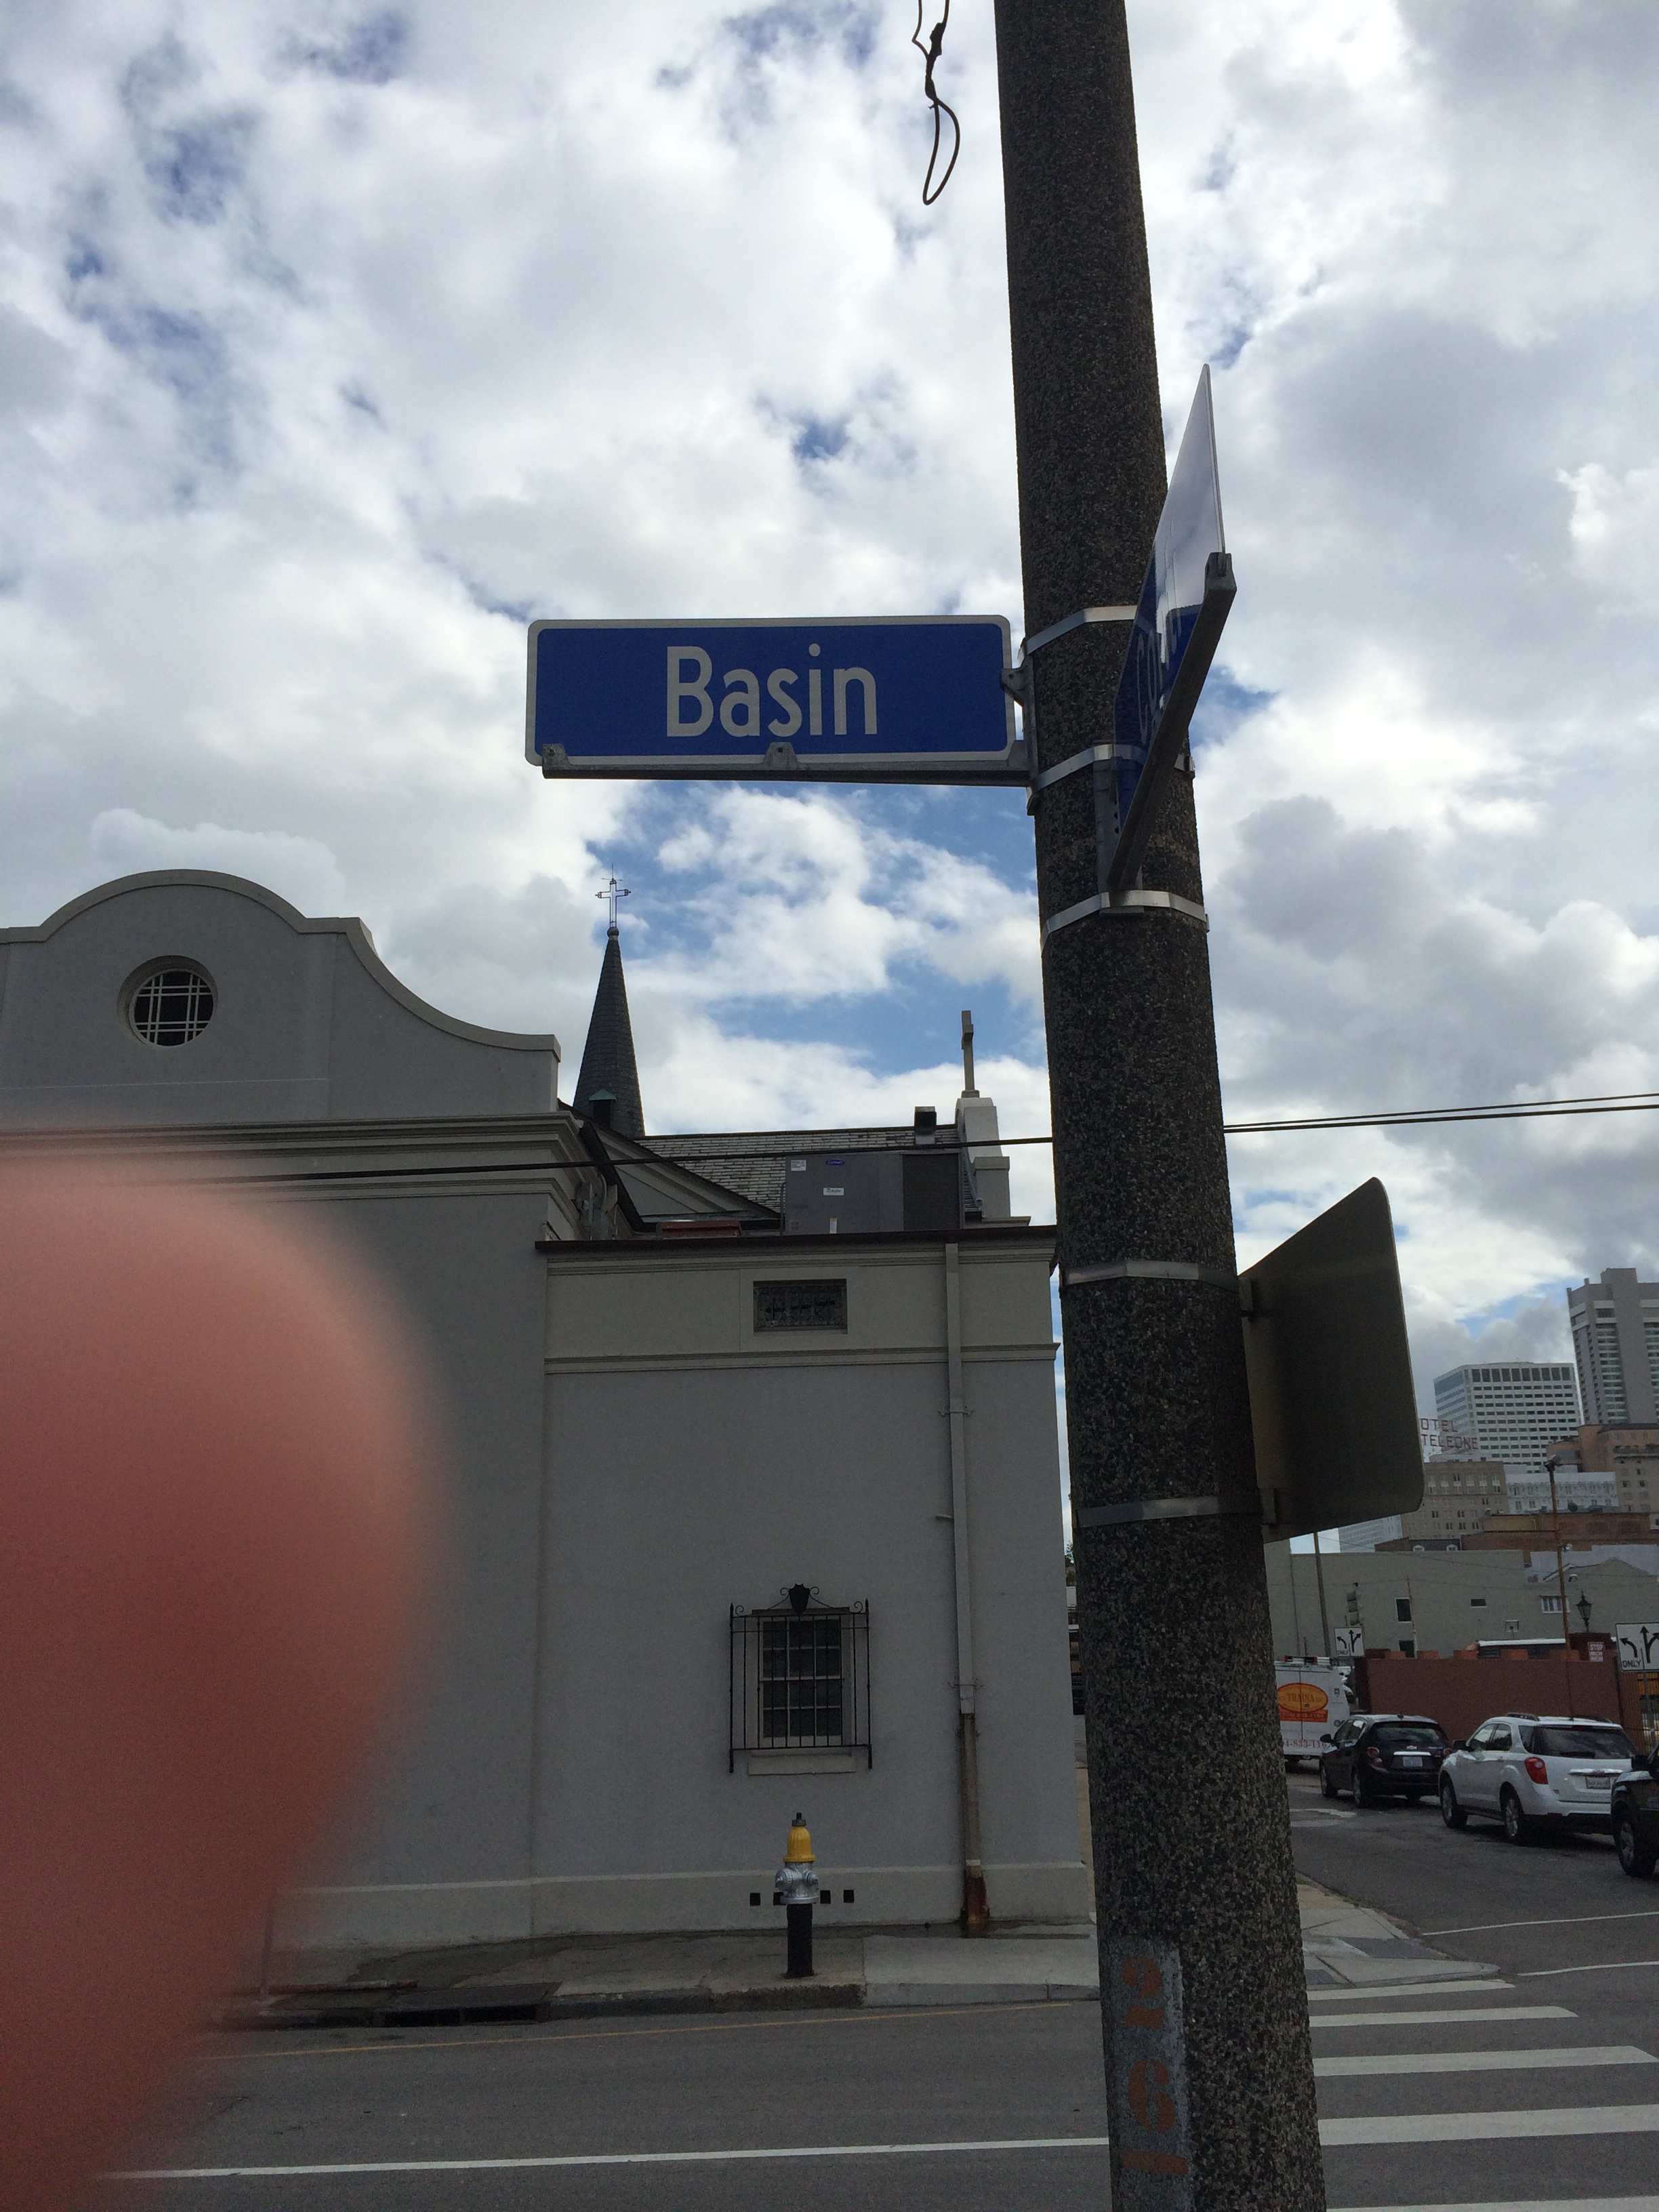 Basin street sign